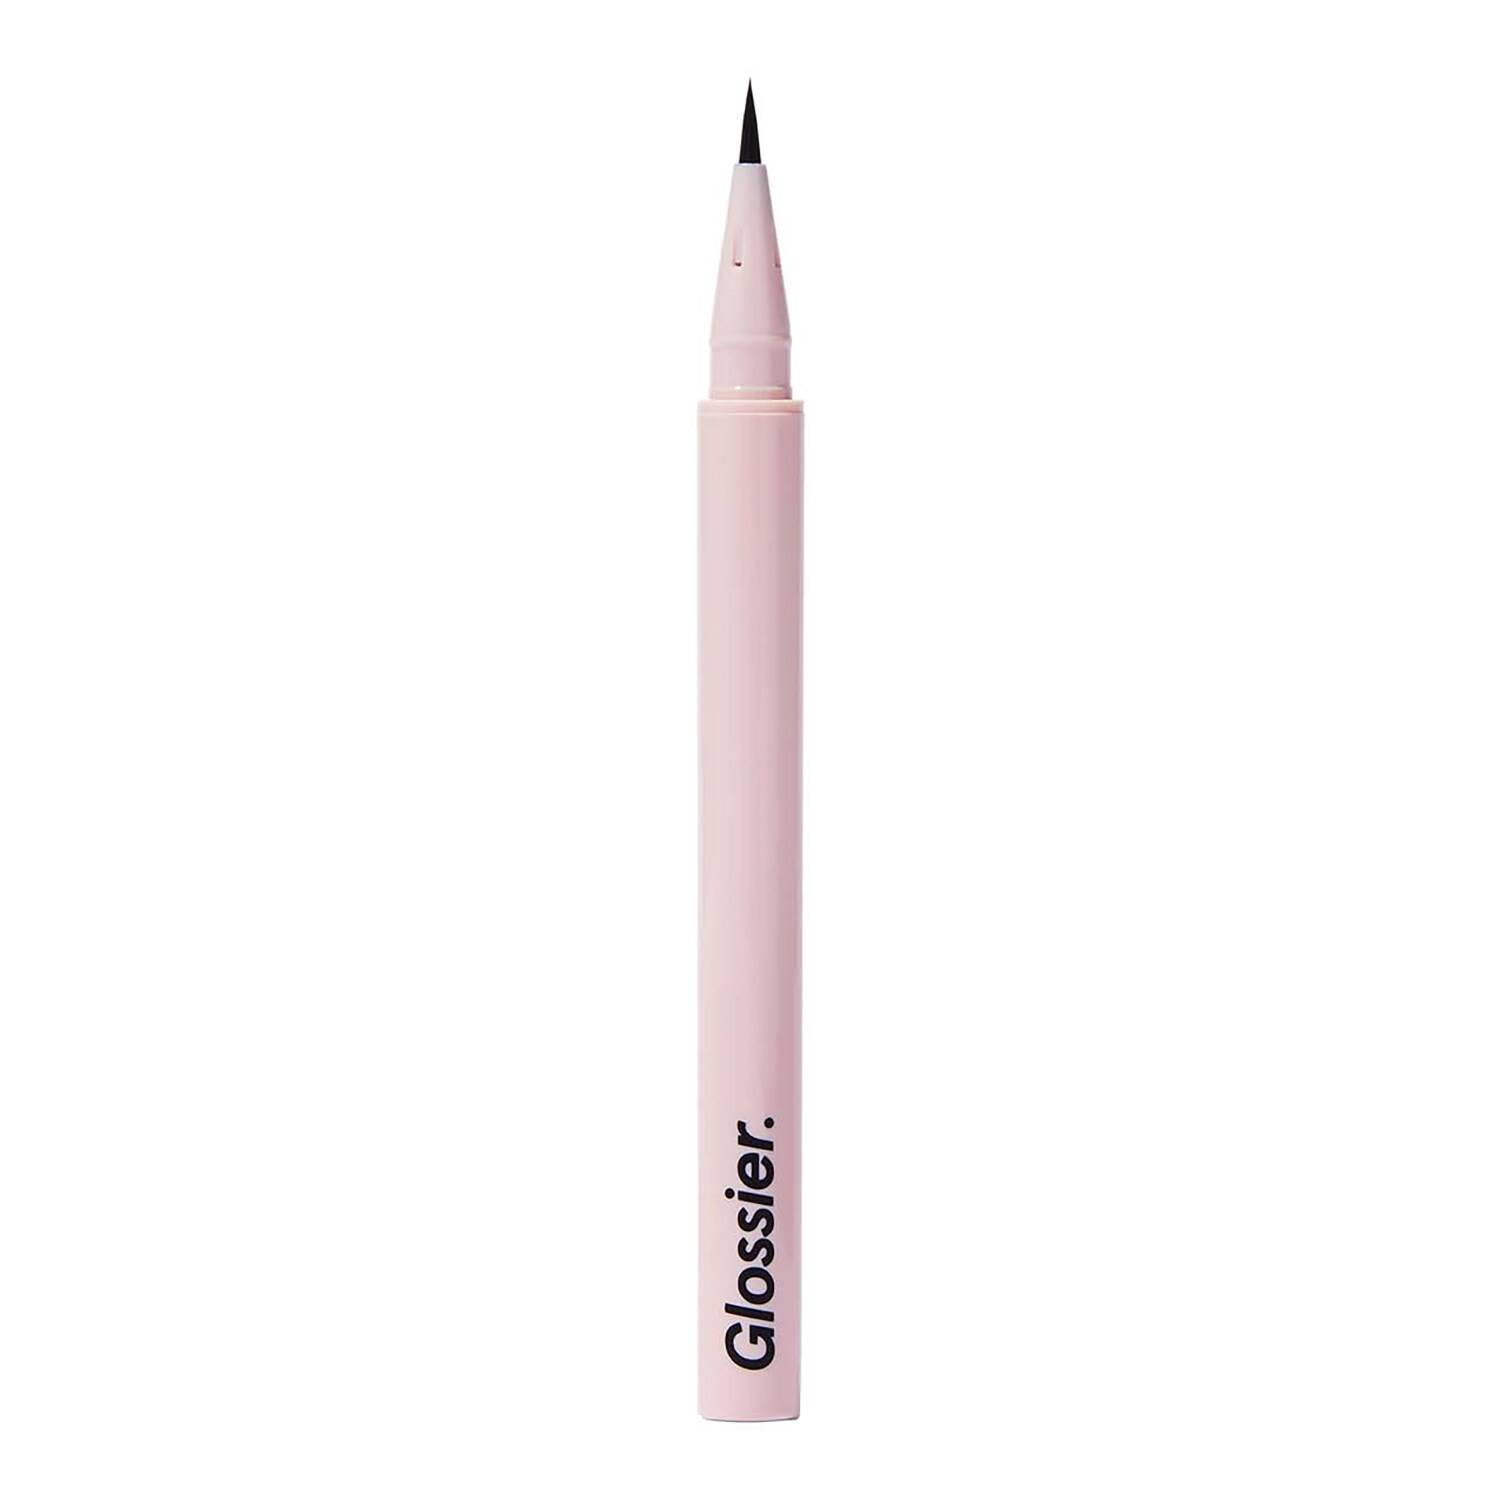 Glossier Pro Tip Long-Wearing Liquid Eyeliner Pen 0.48Ml Black